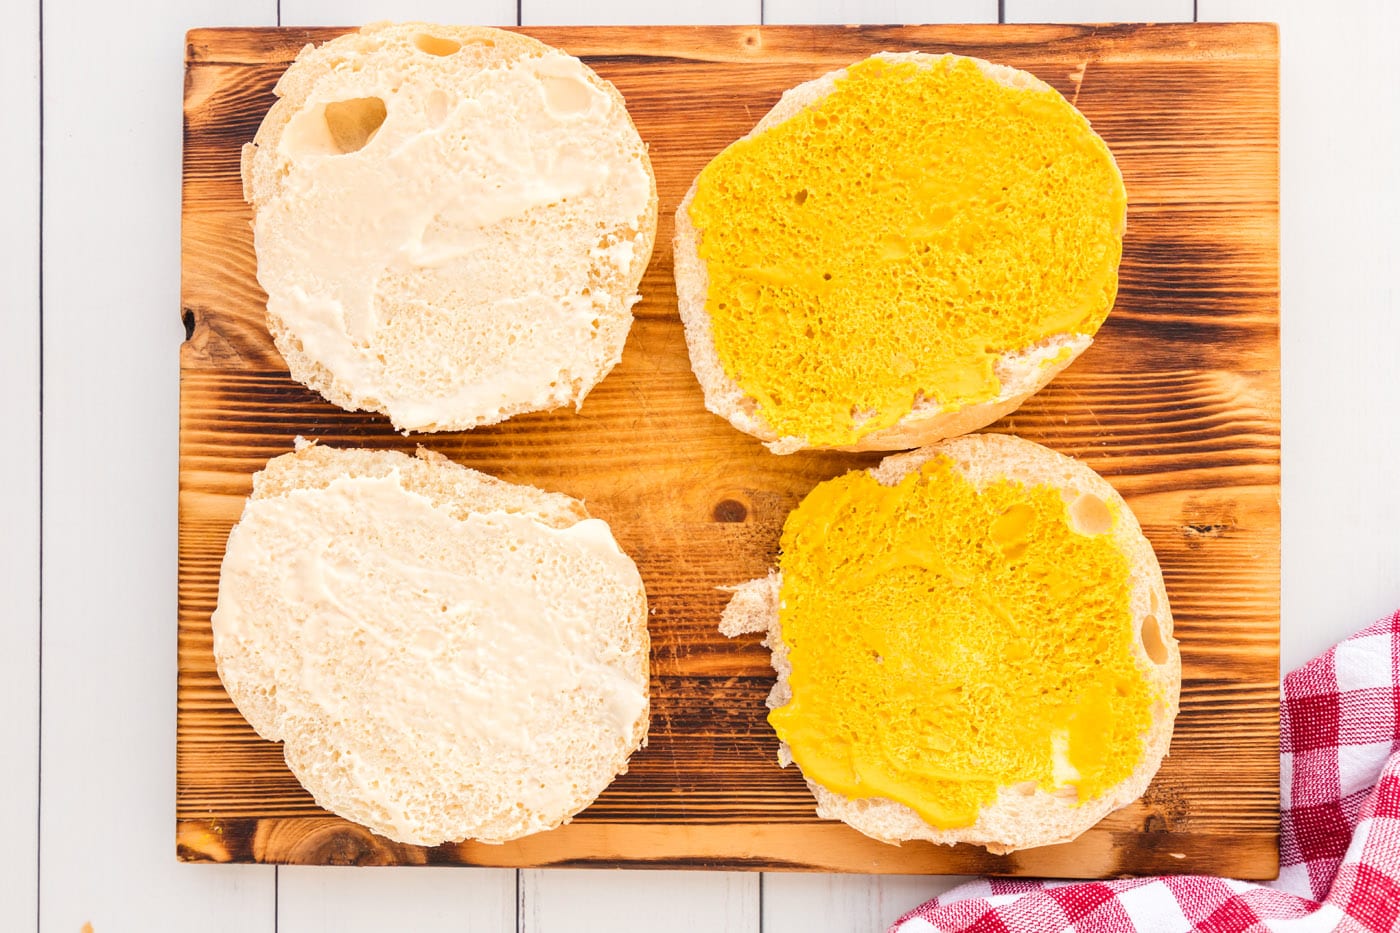 adding horseradish mayo and mustard to a sandwich bun